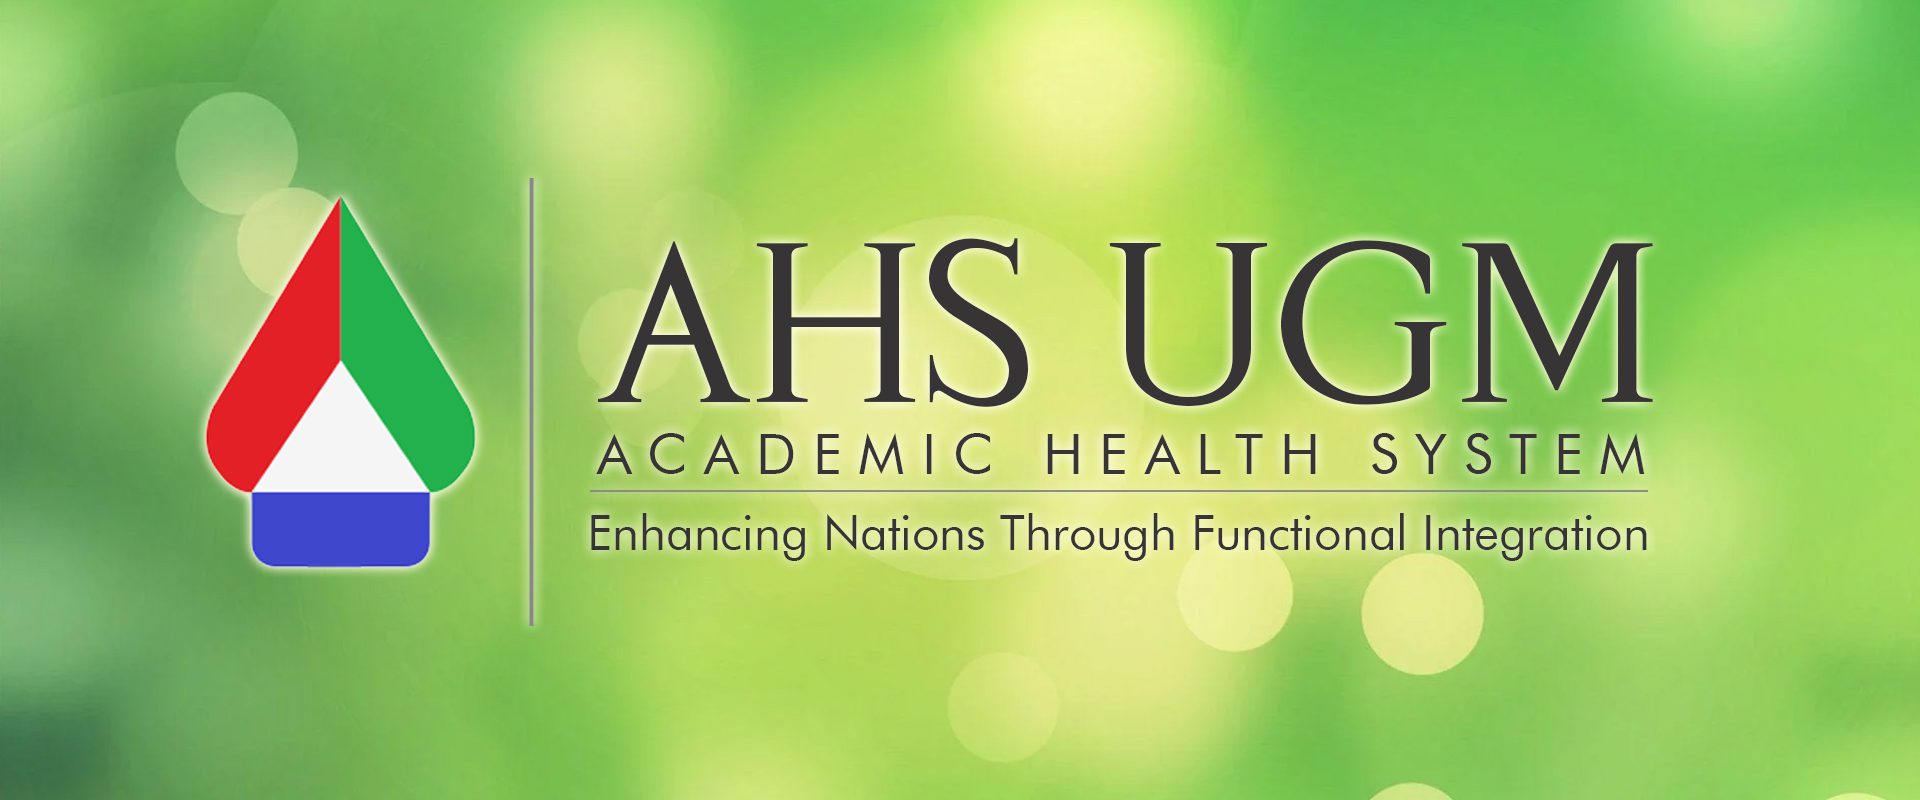 Academic Health System (AHS) UGM